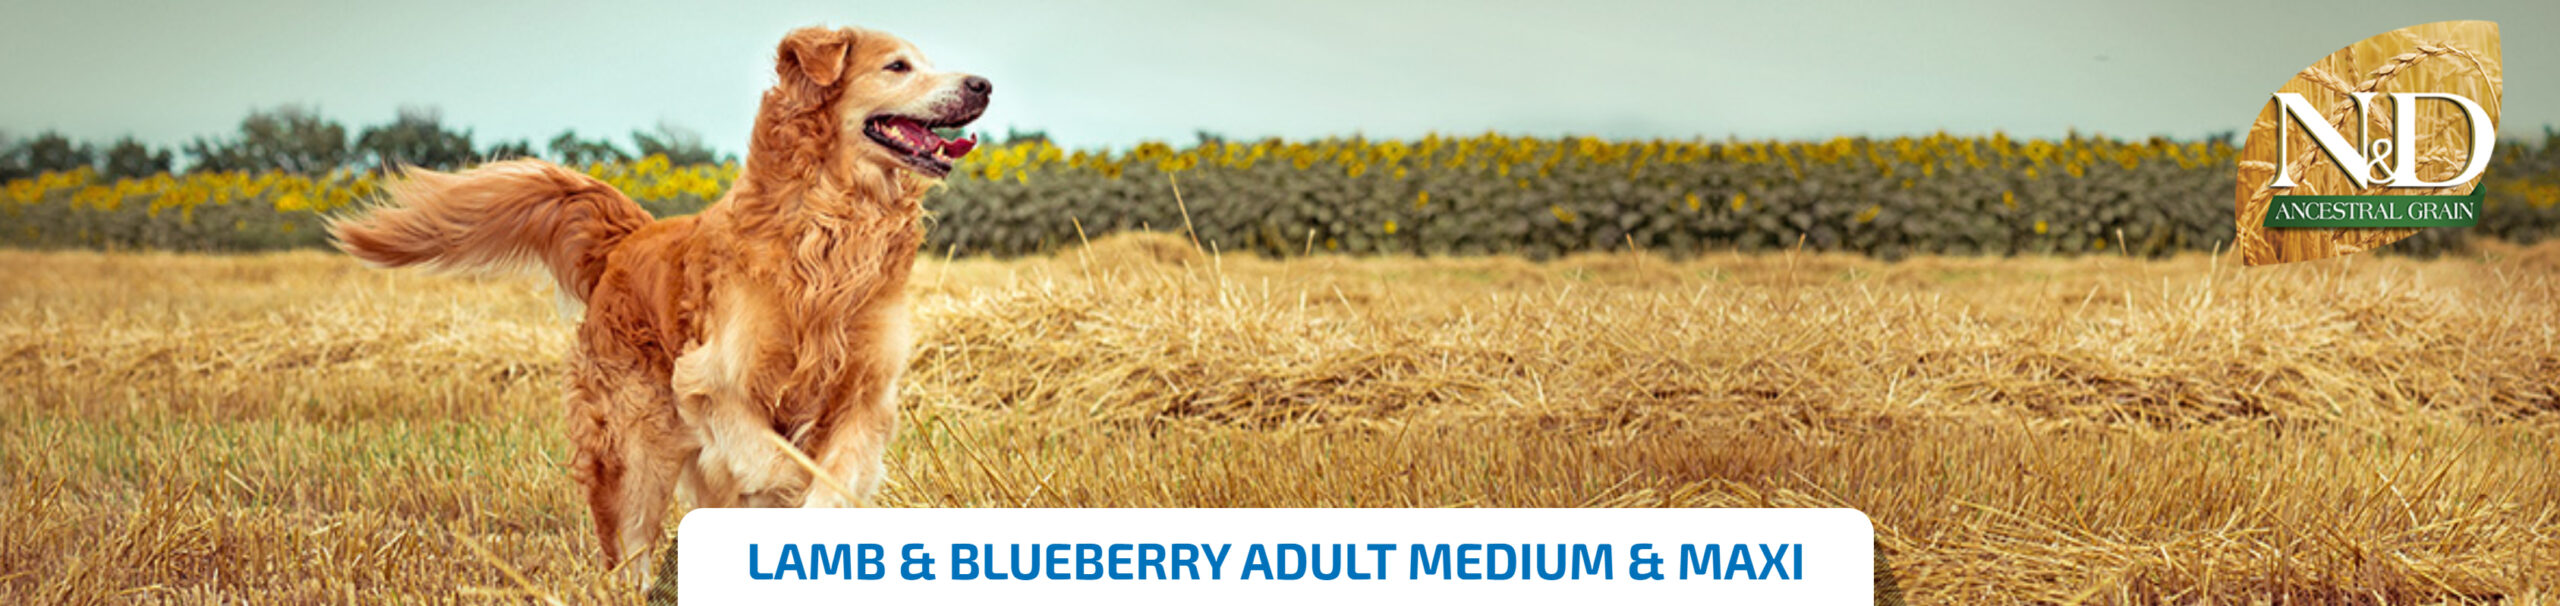 lamb blueberry adult medium maxi long scaled